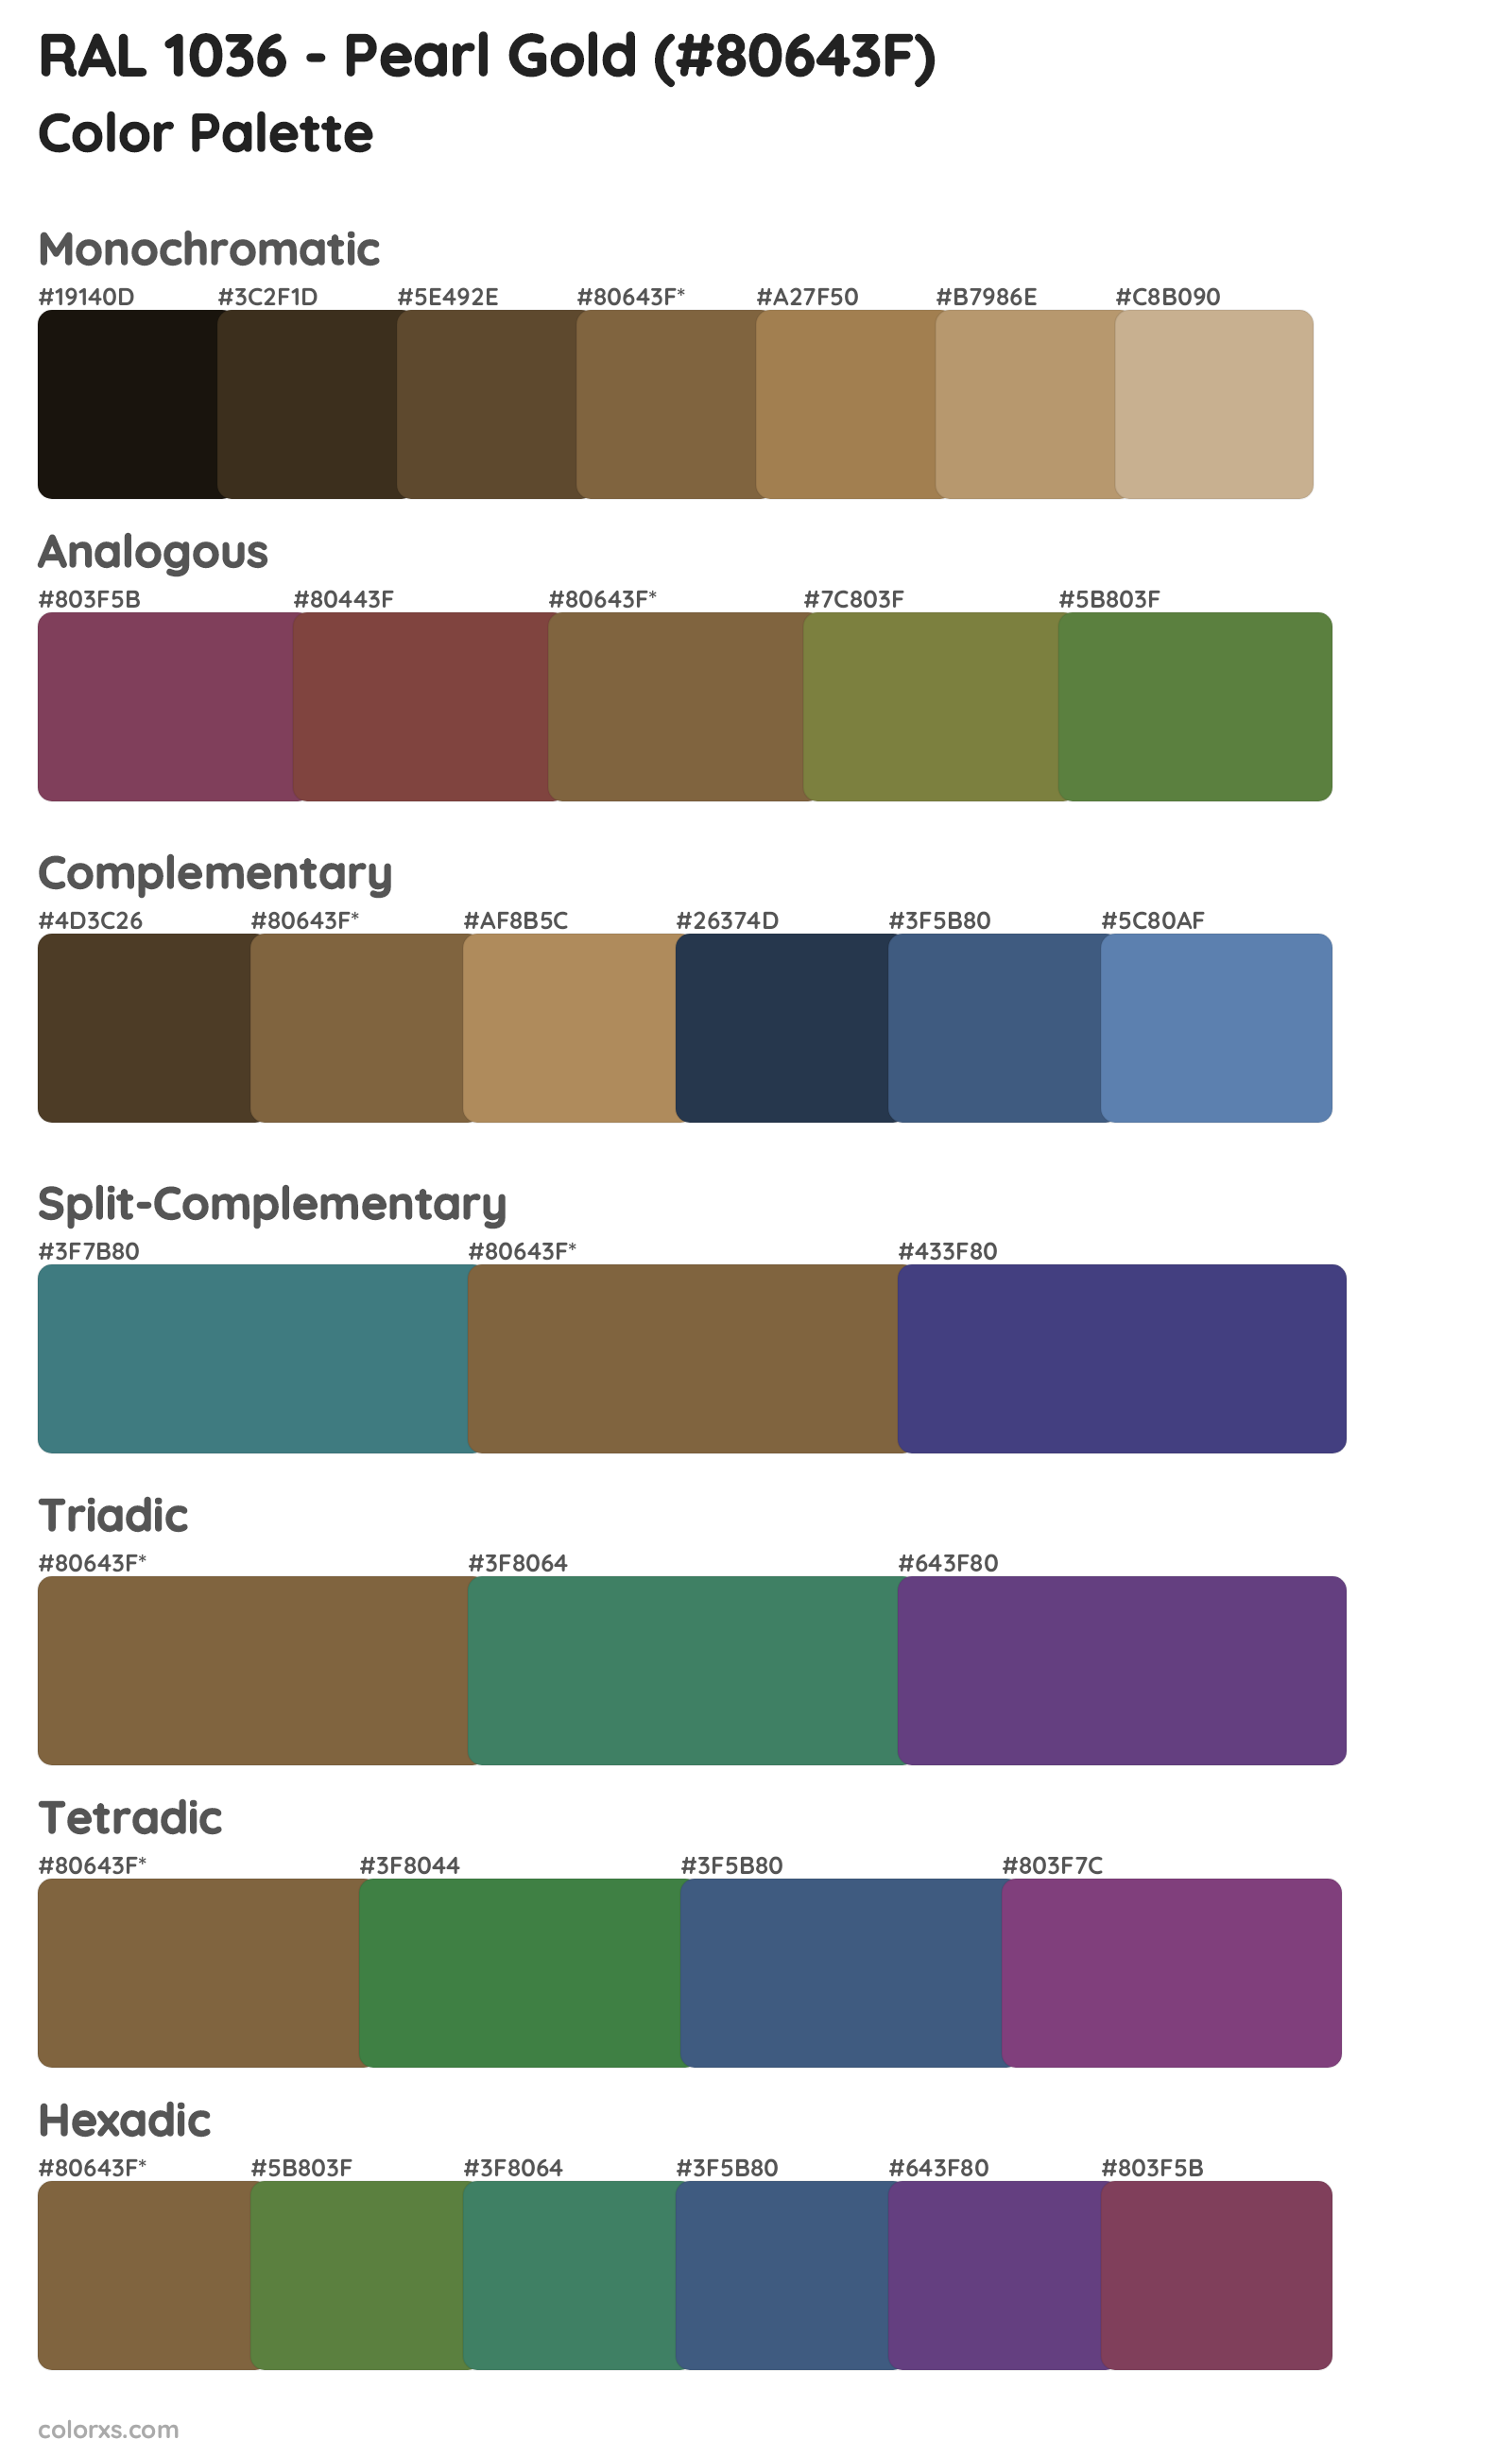 RAL 1036 - Pearl Gold Color Scheme Palettes